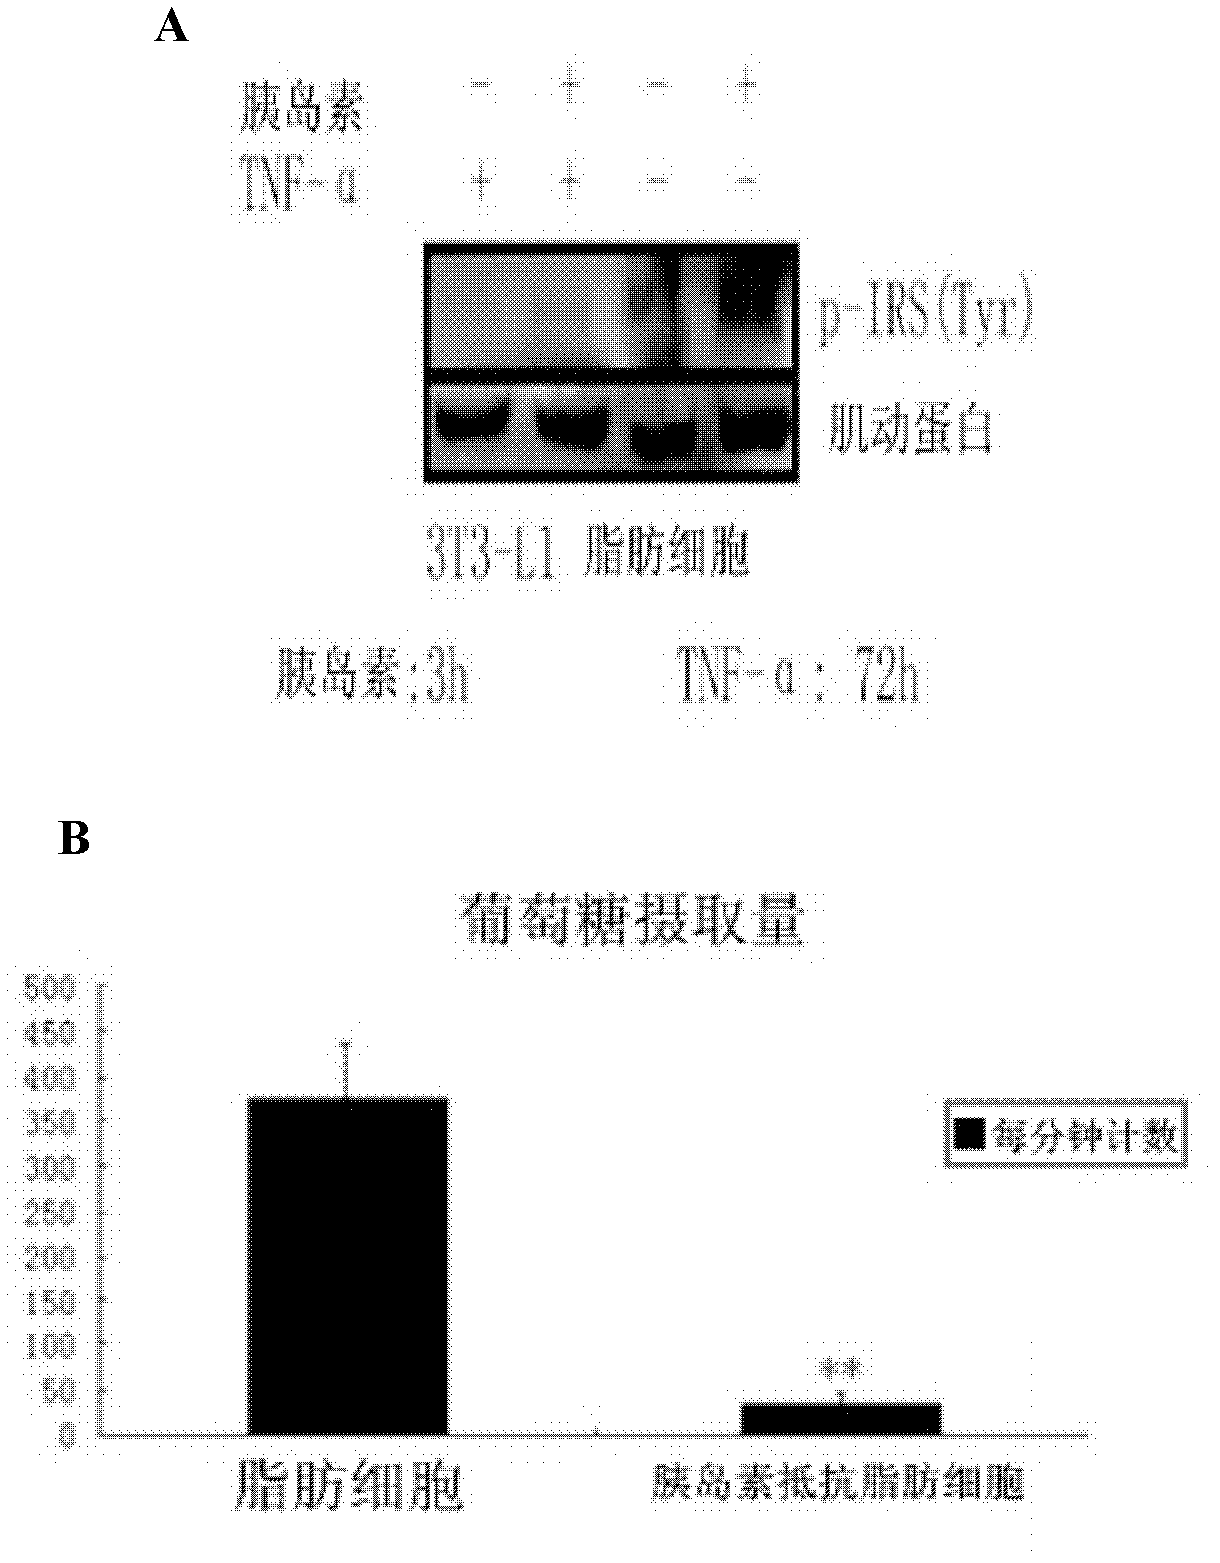 Application of geranylgeranyl diphosphate synthase (GGPPS) antagonist in preparation of medicament for treating II-type diabetes mellitus